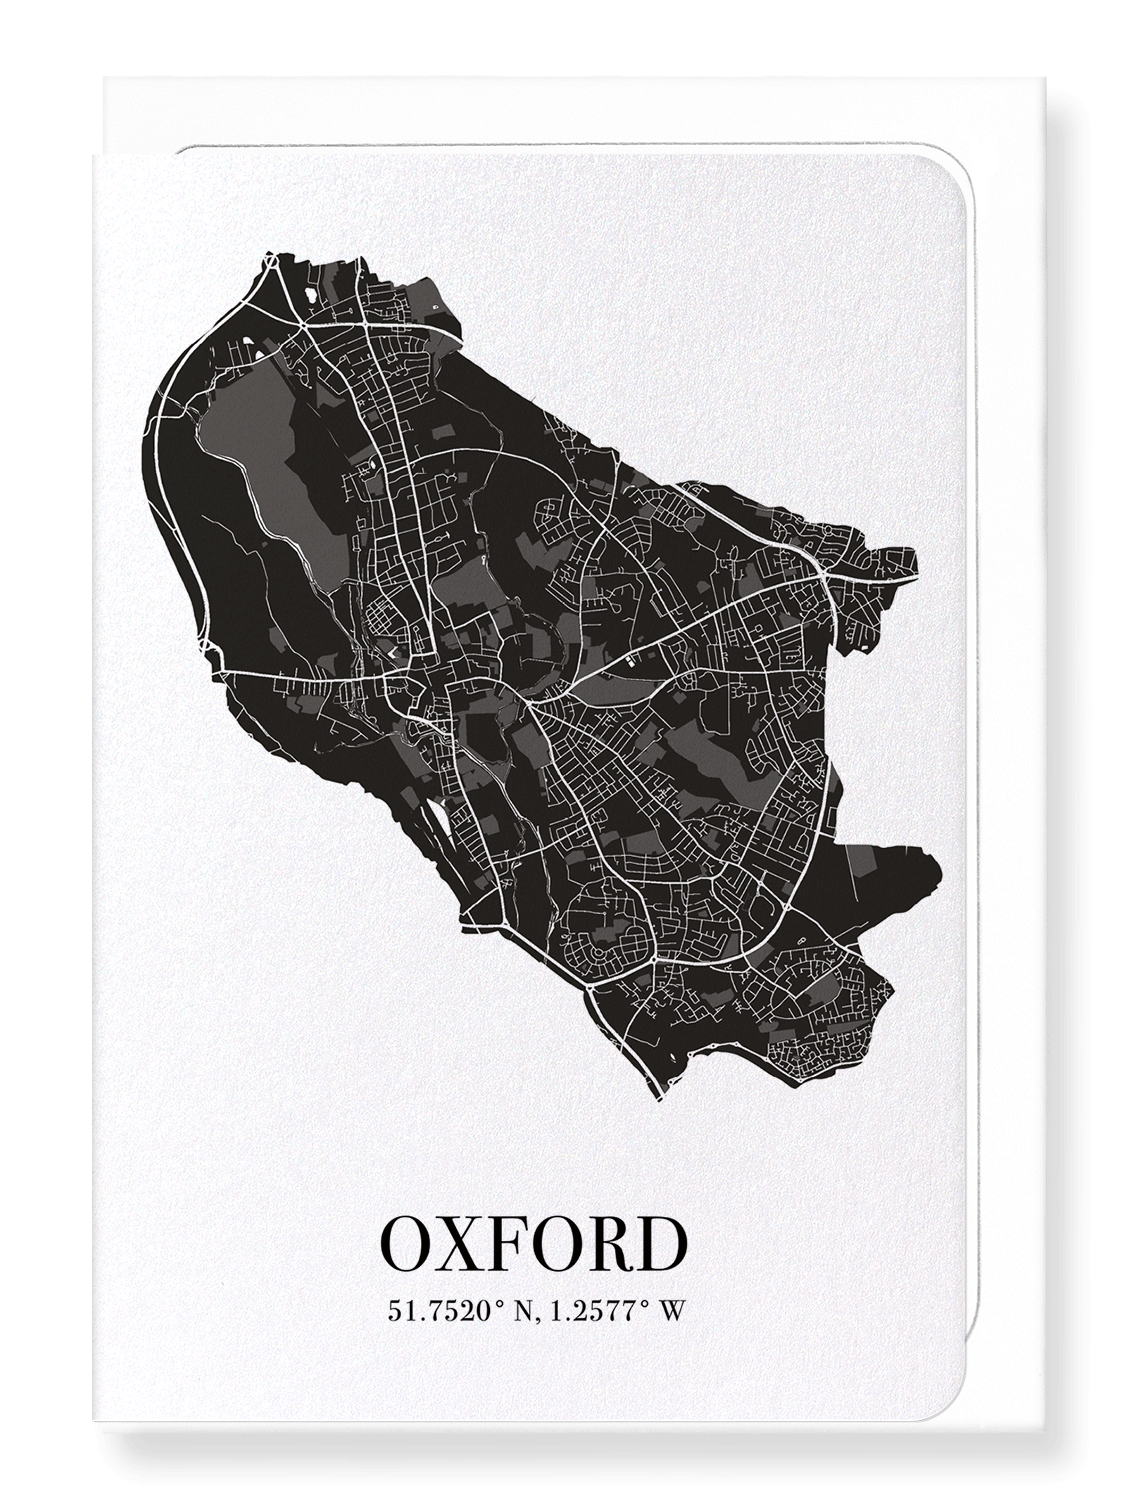 OXFORD CUTOUT: Map Cutout Greeting Card